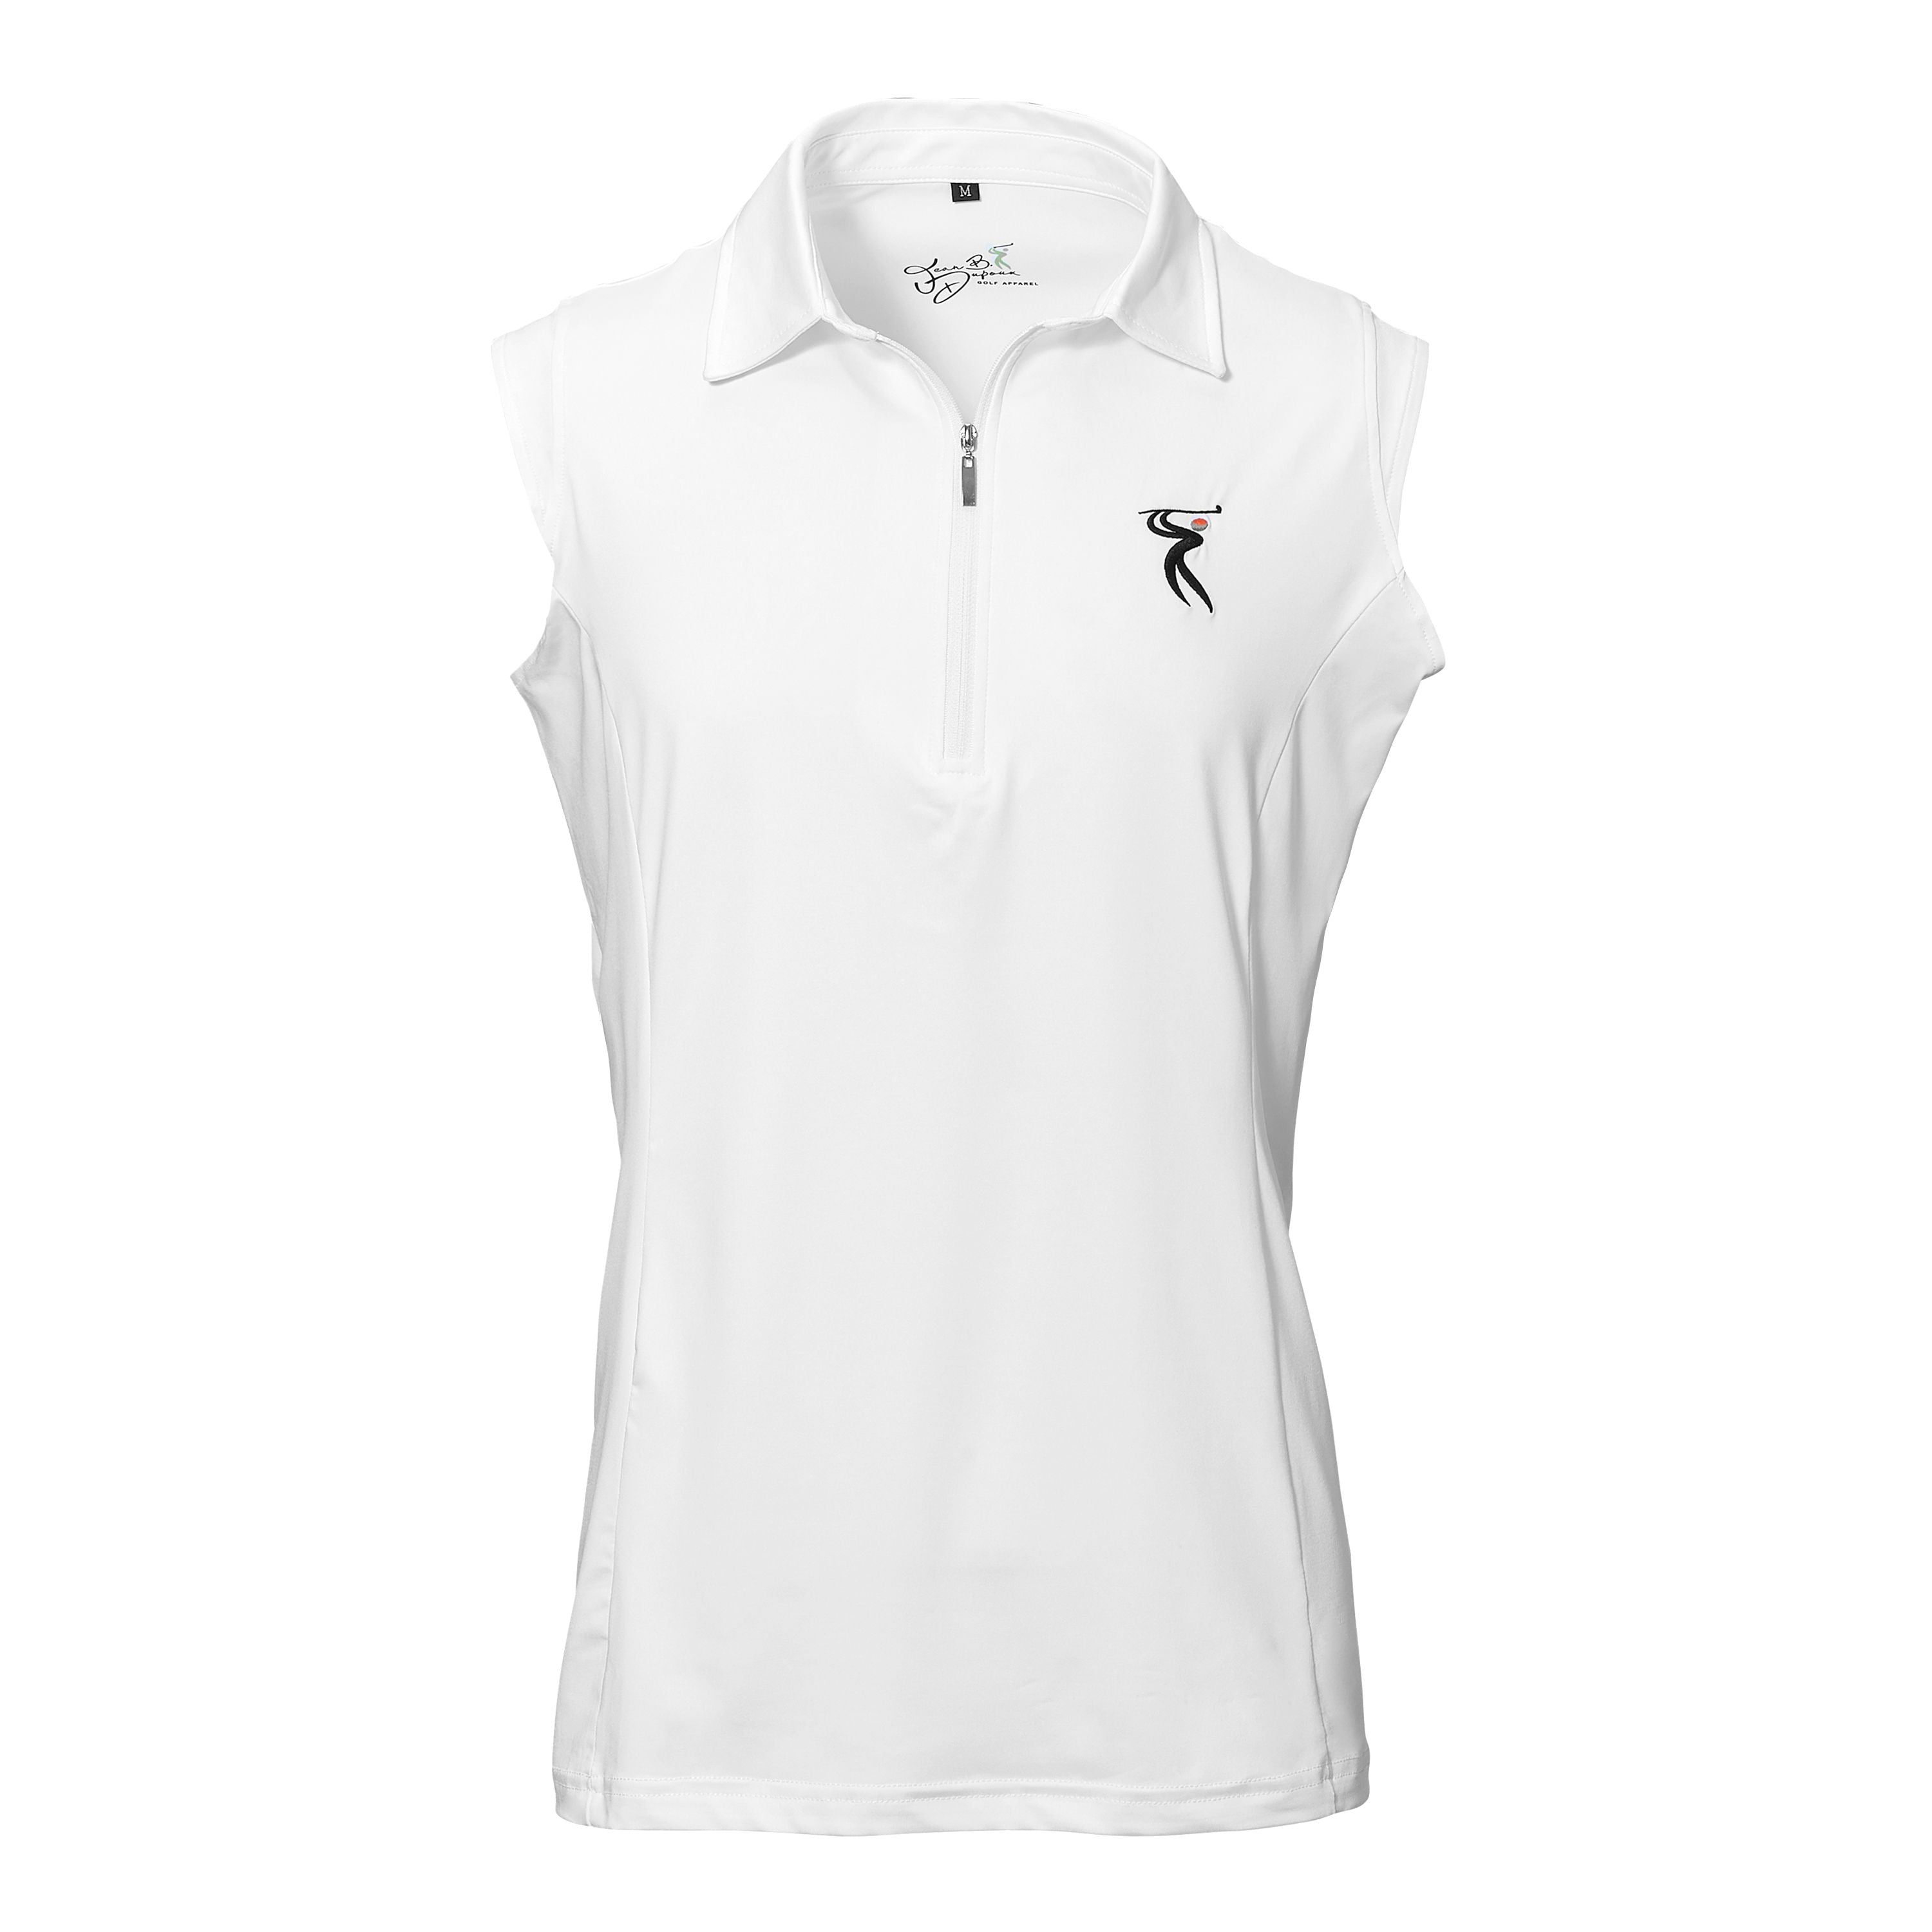 DRI FIT women's golf shirts 7014, 88% Polyester Dri fit, 12% spandex. - My Golf Shirts